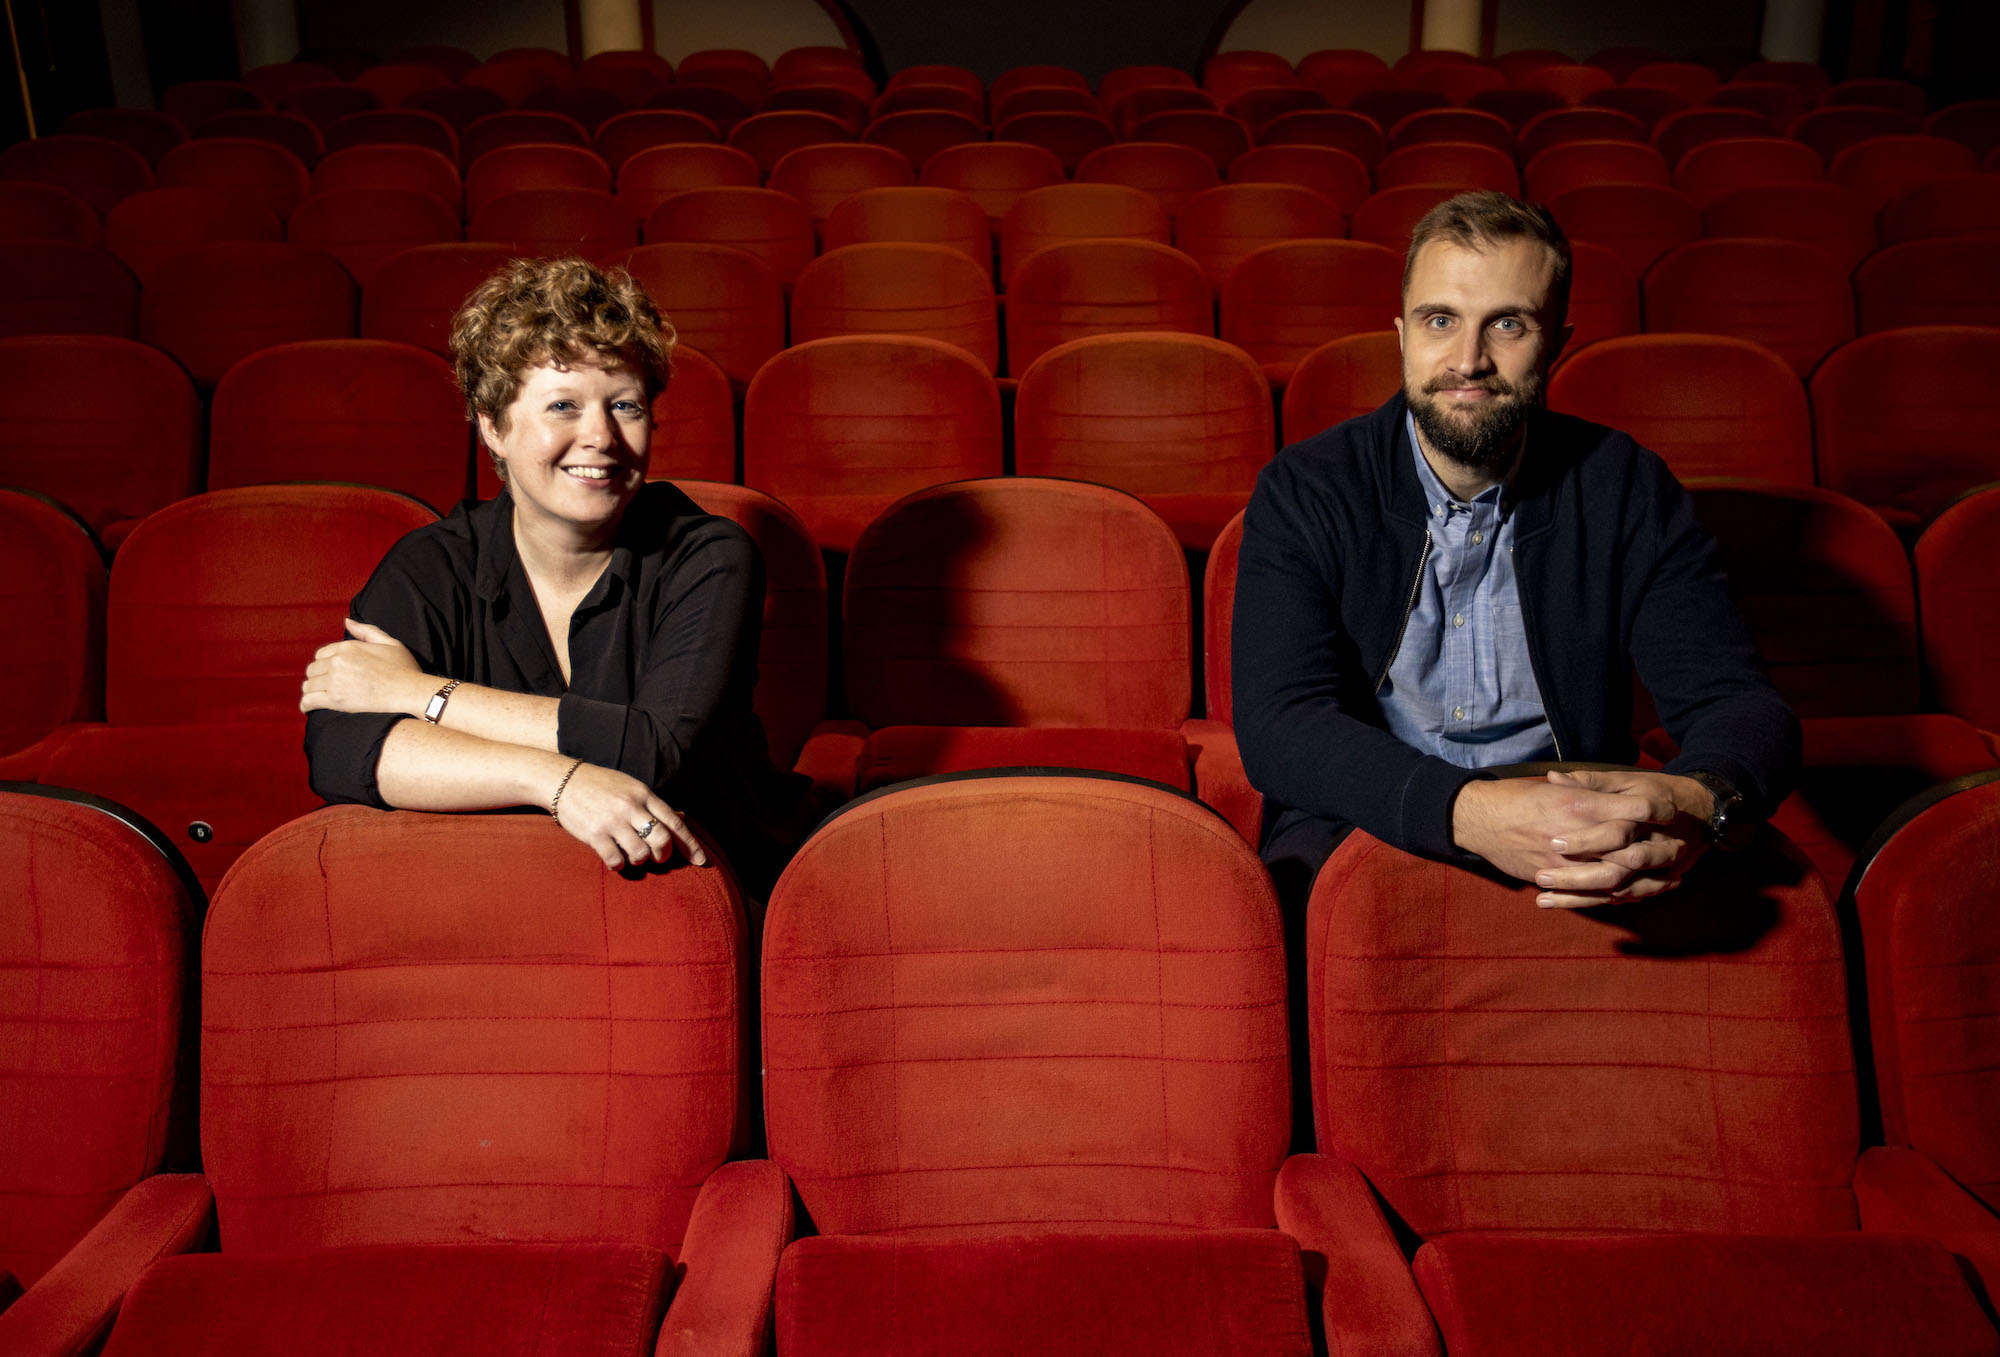 Glasgow film start-up brings i-conic world cinema to Scottish screens